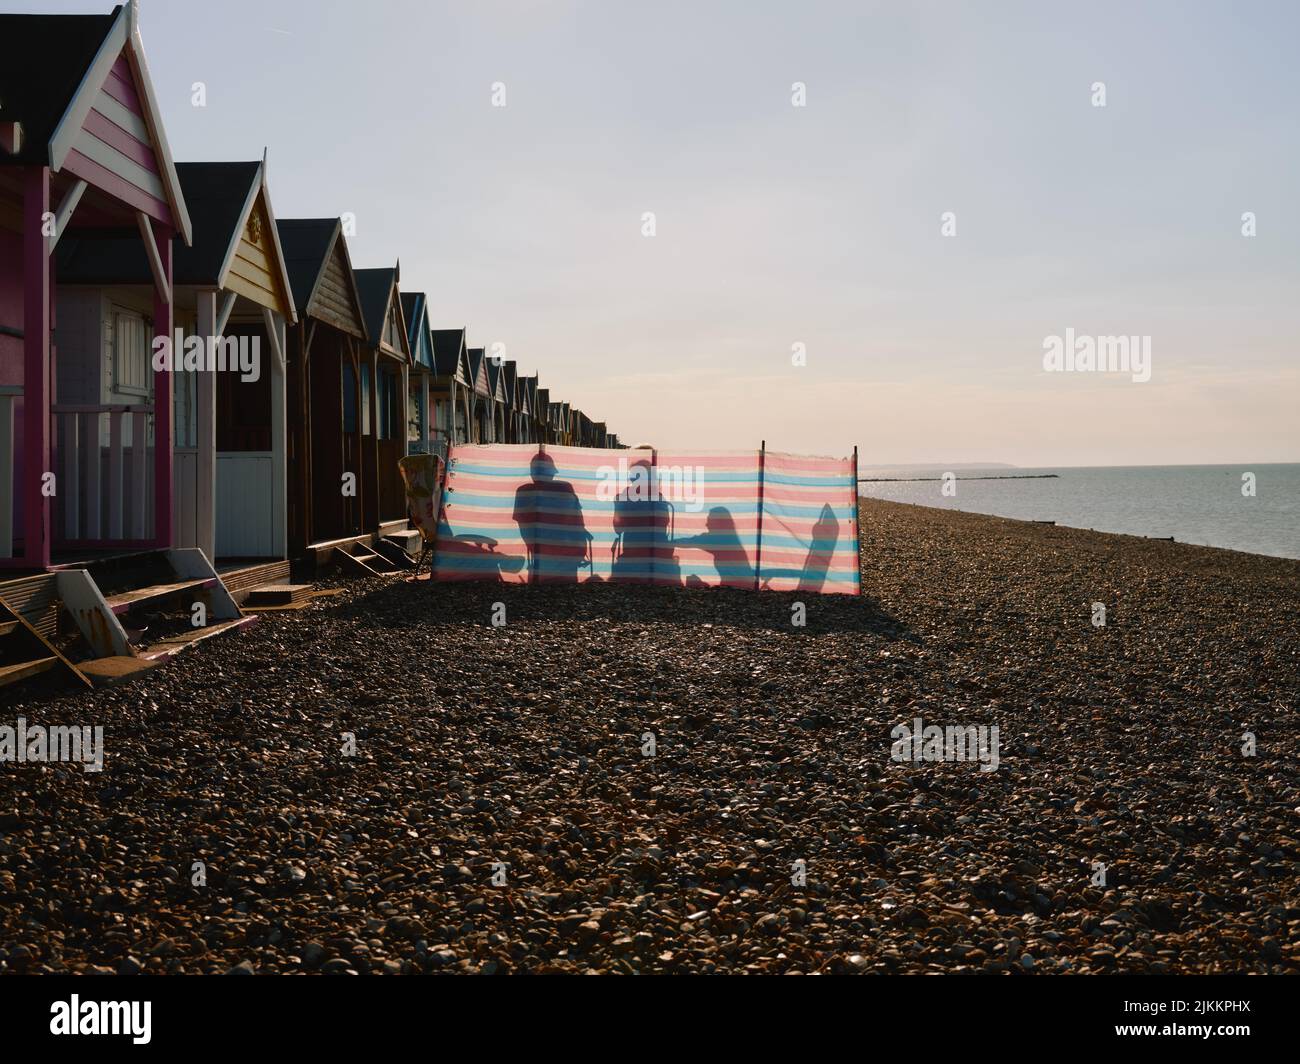 The summer beach, beach huts, windbreaker and family enjoying a summers day on Herne Bay shingle beach North Kent coast England UK Stock Photo